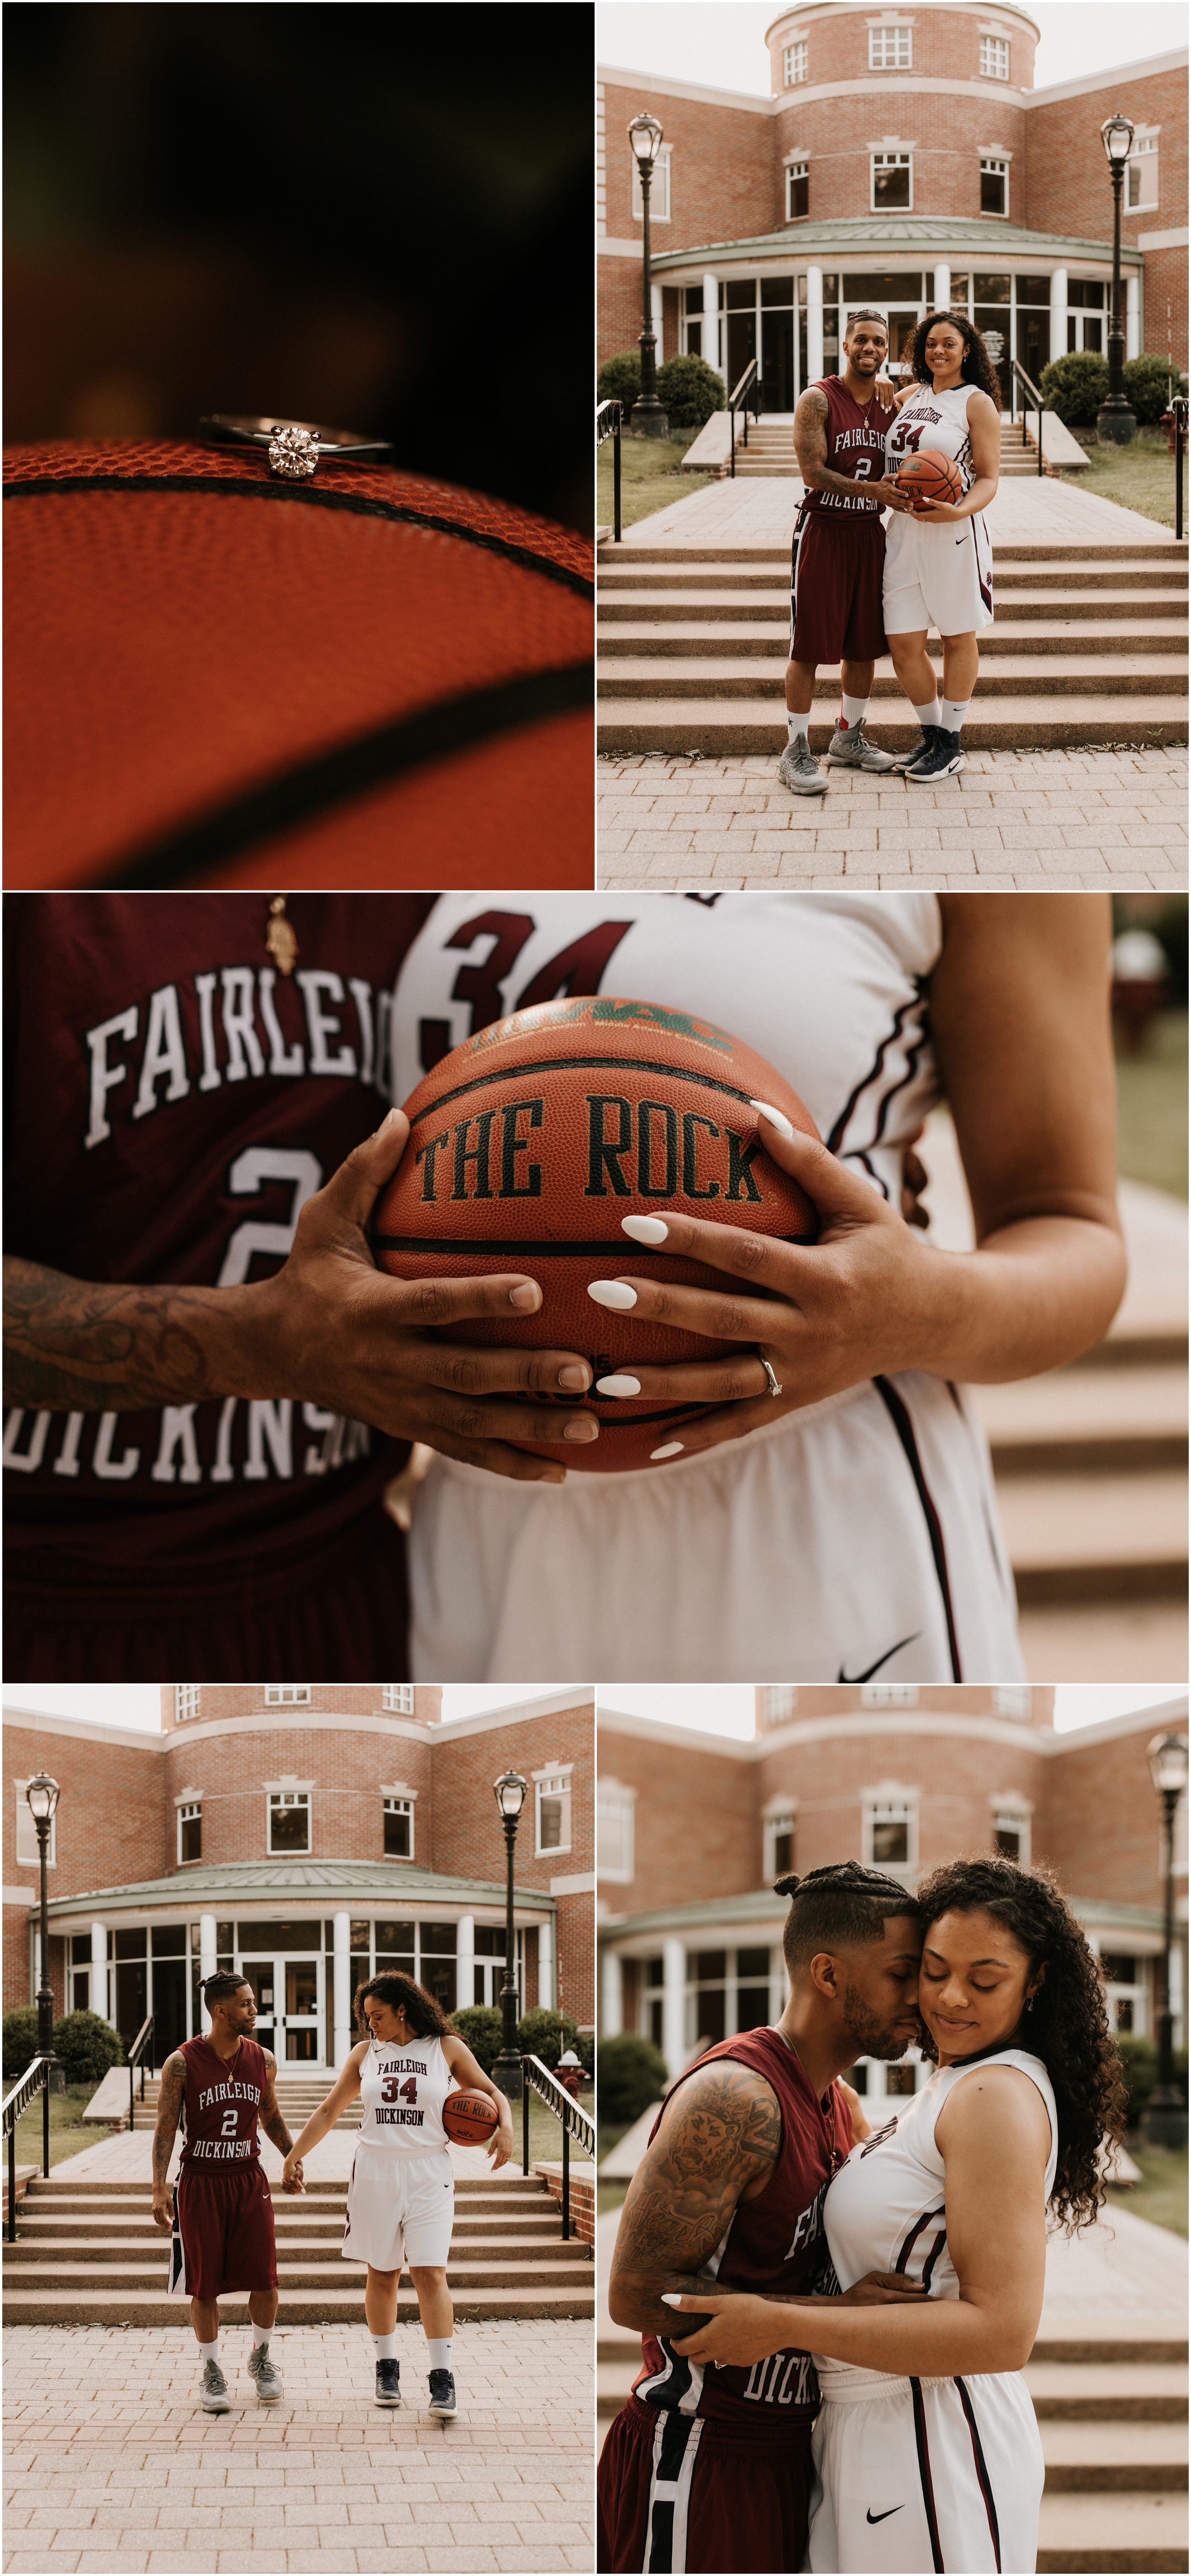 couple wearing FDU basketball uniform and holding basketball